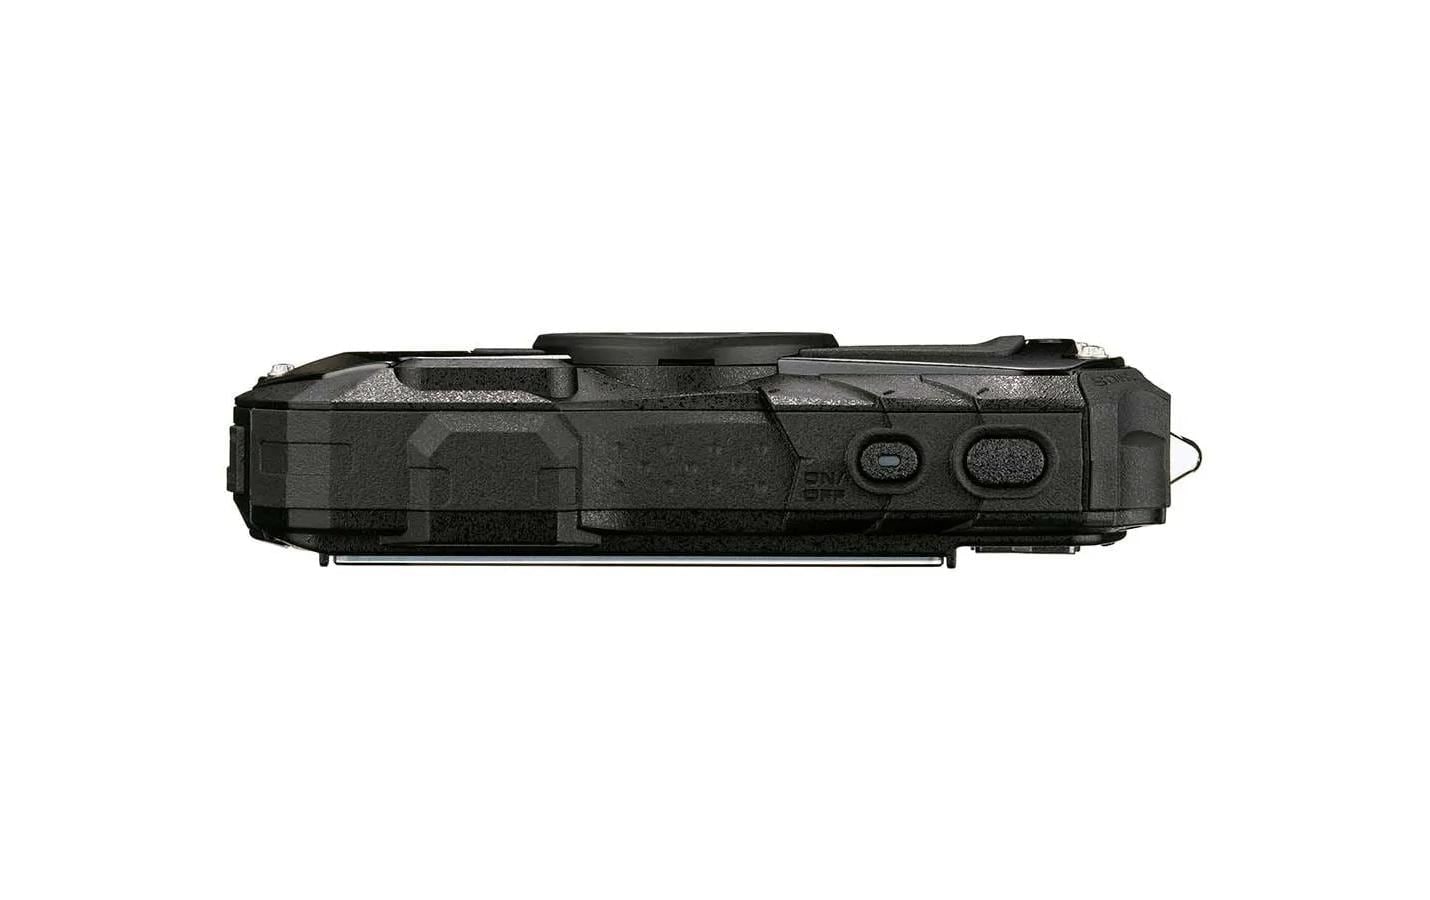 Ricoh Outdoor-Kamera »WG-80 Schwarz«, 16 MP